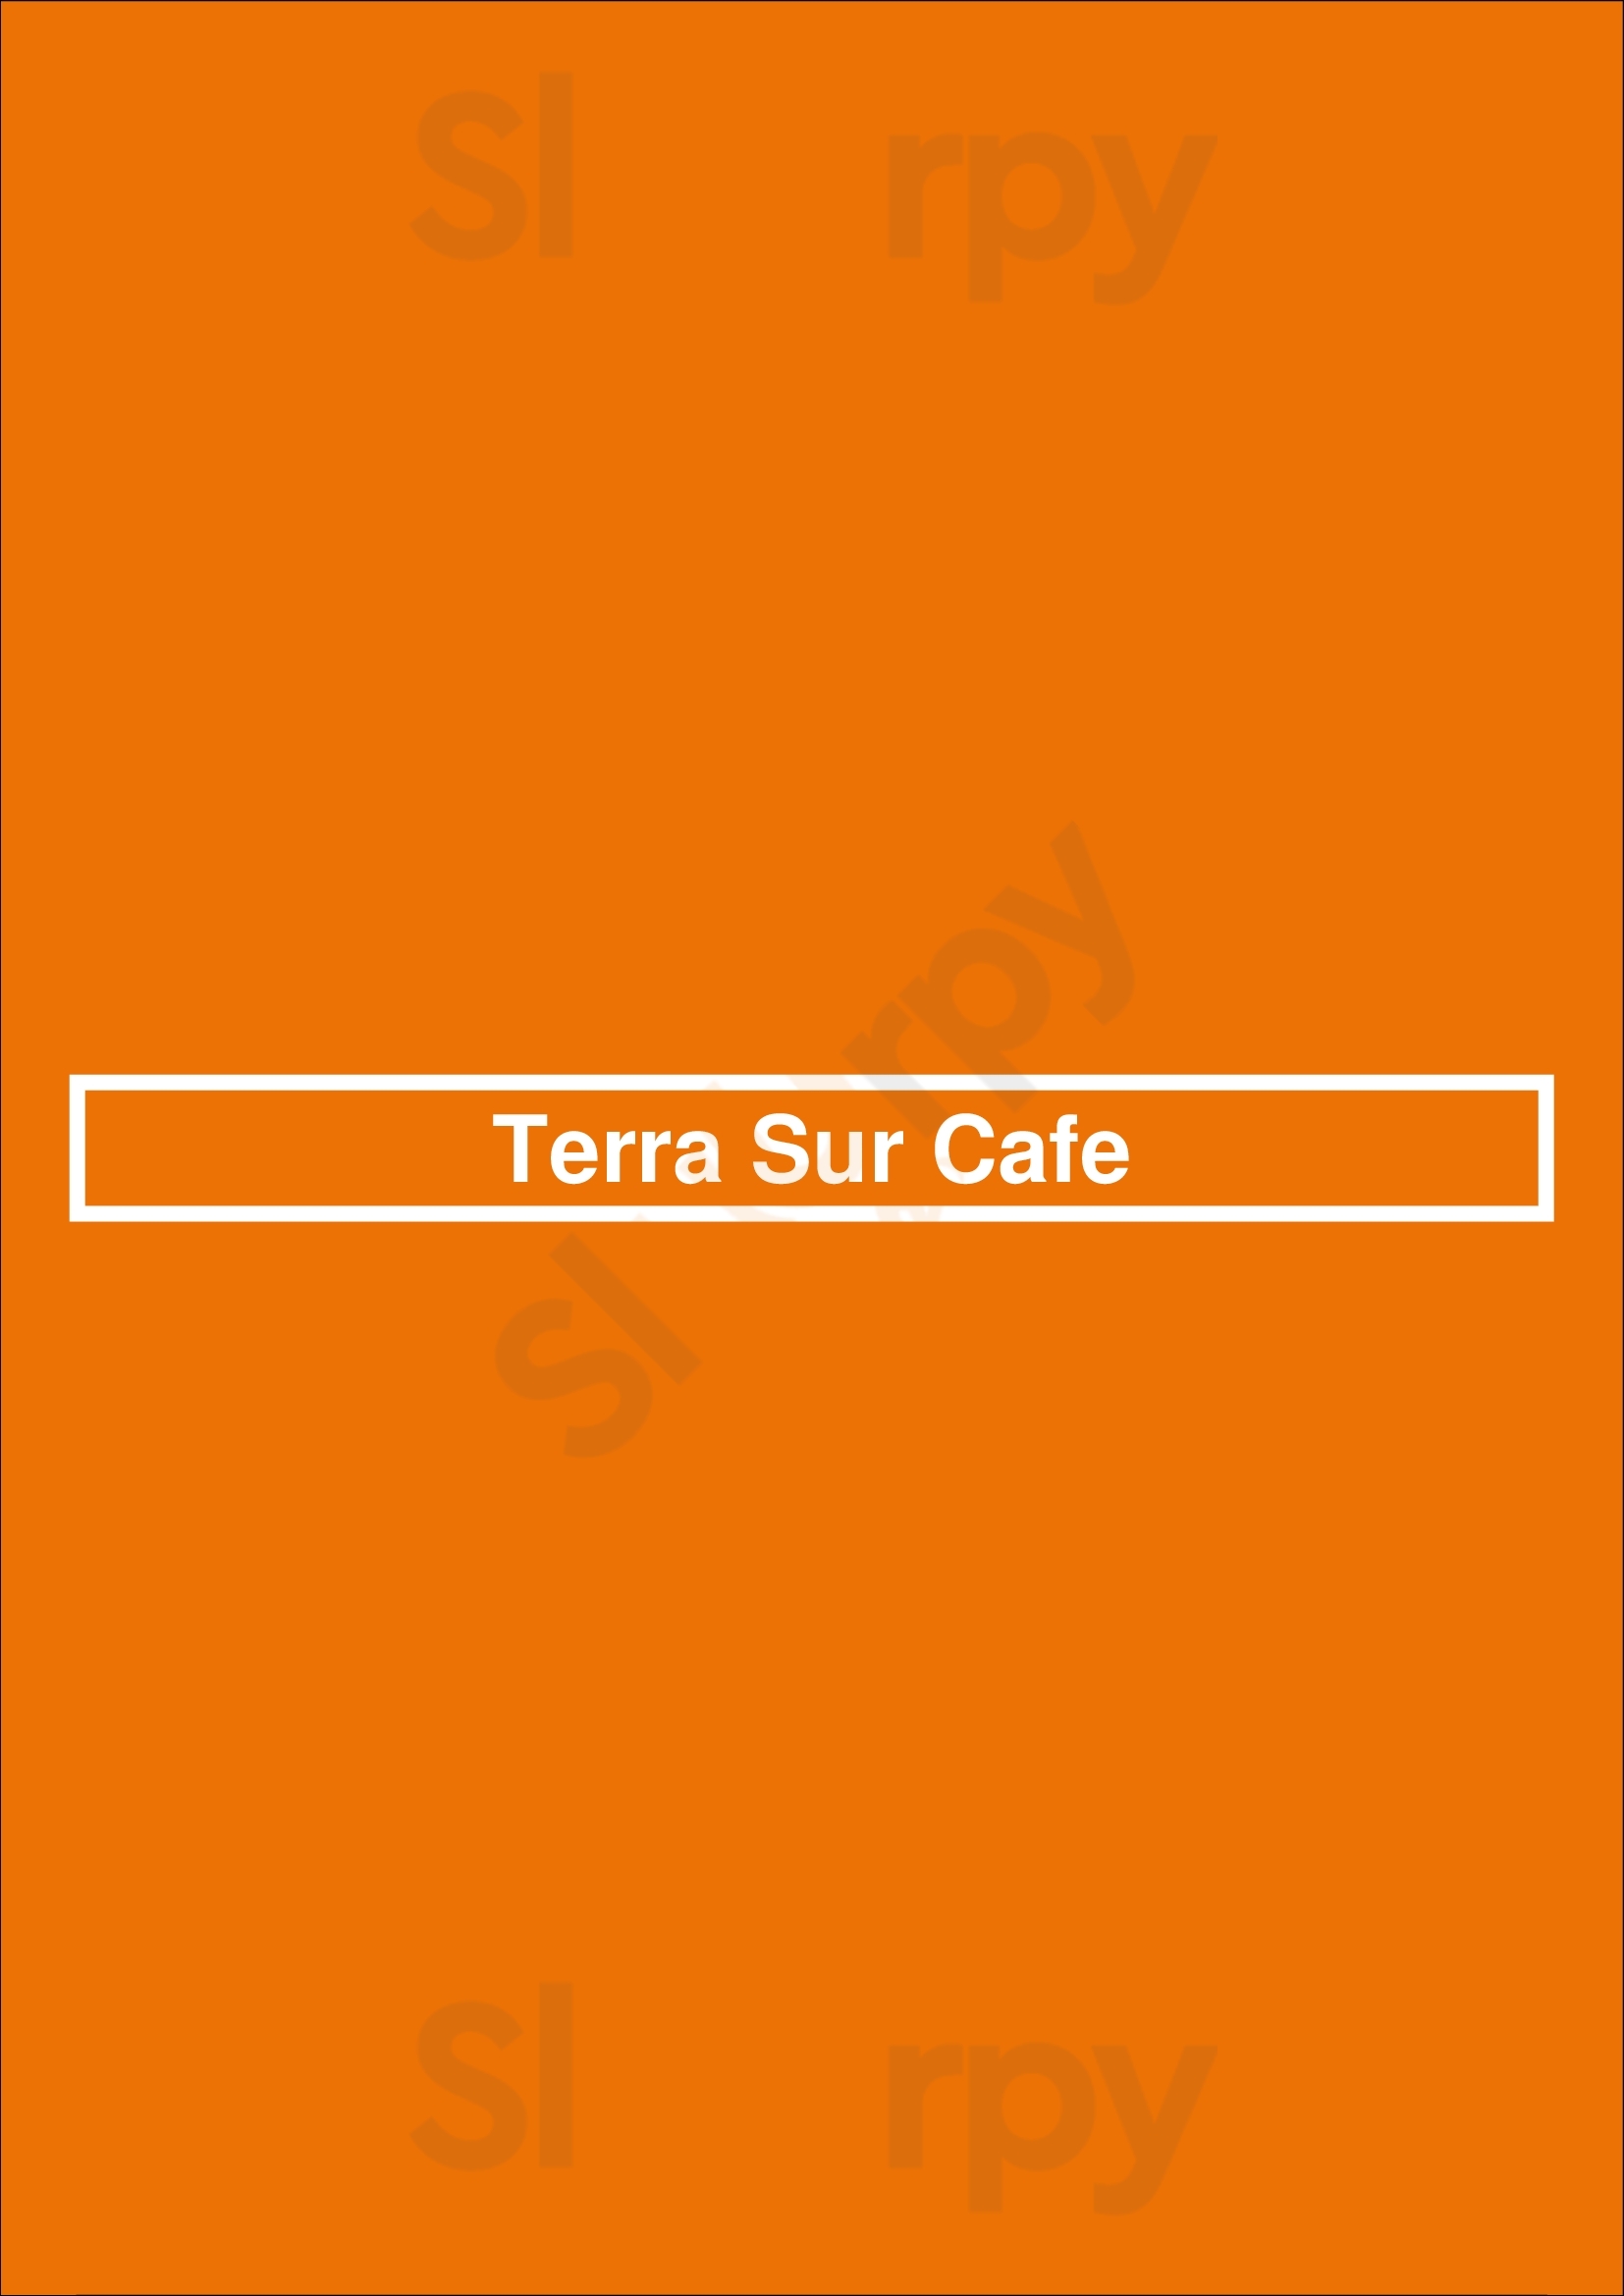 Terra Sur Cafe Tampa Menu - 1